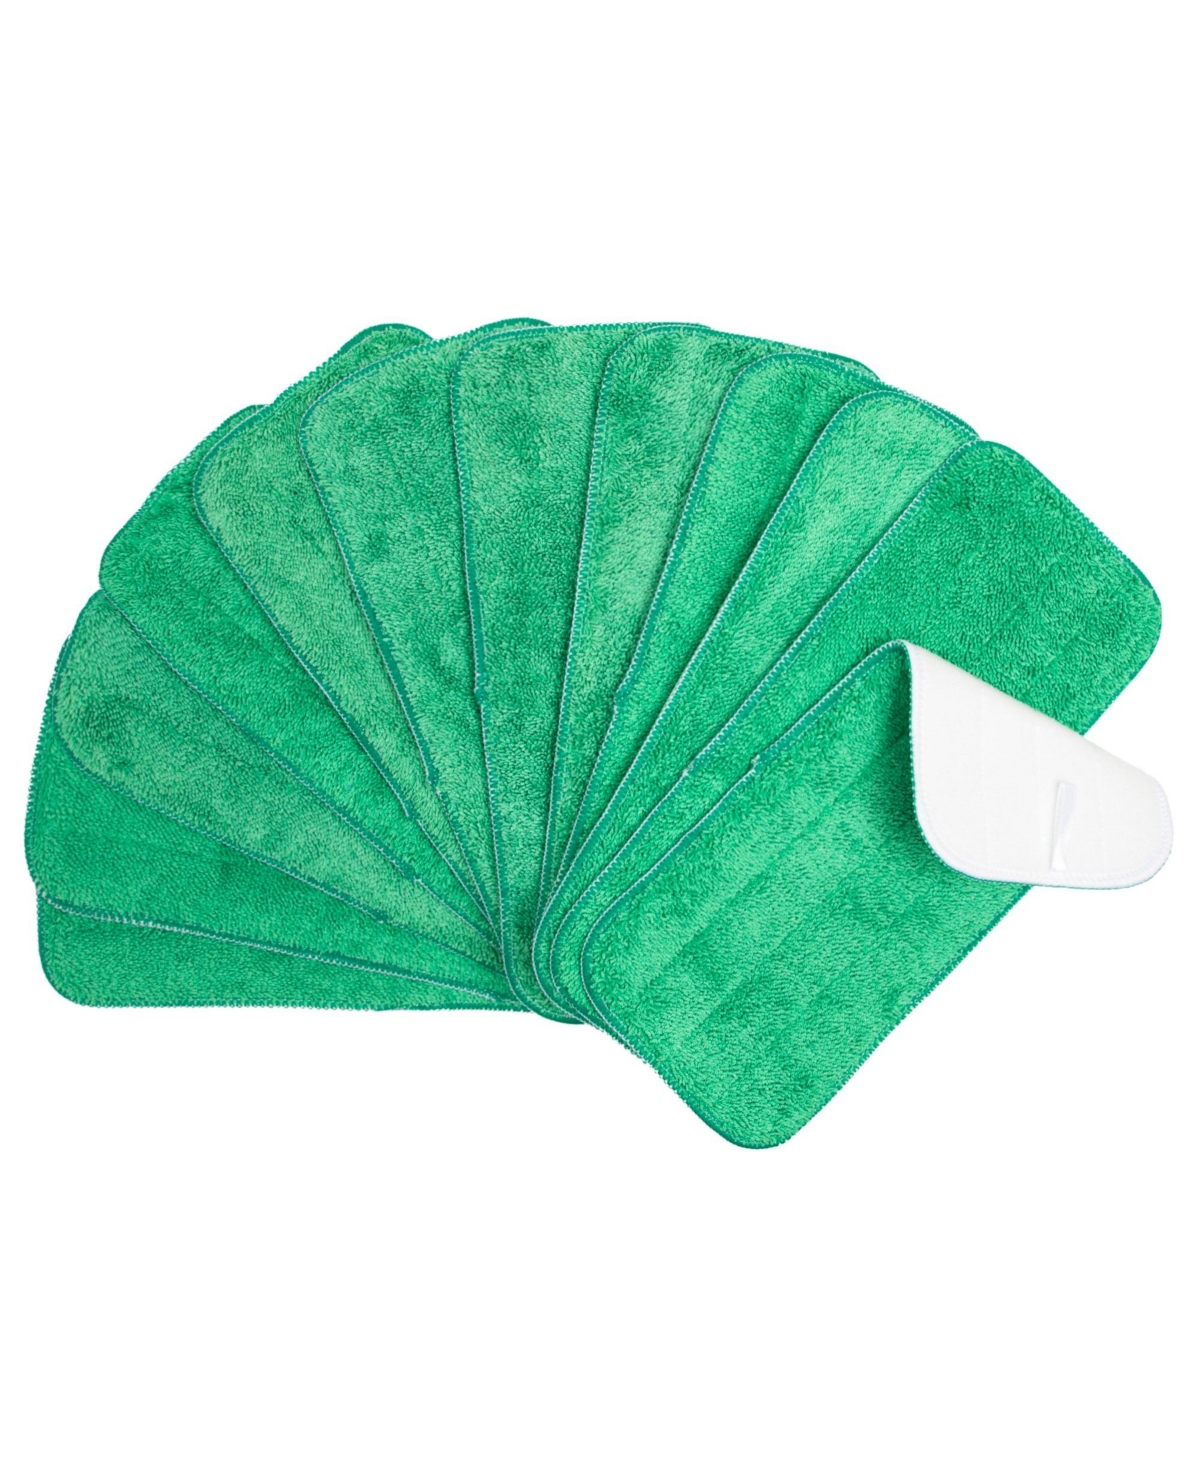 Microfiber Flat Wet Mop Refills (12 Pack) - 13", Color Options - Green